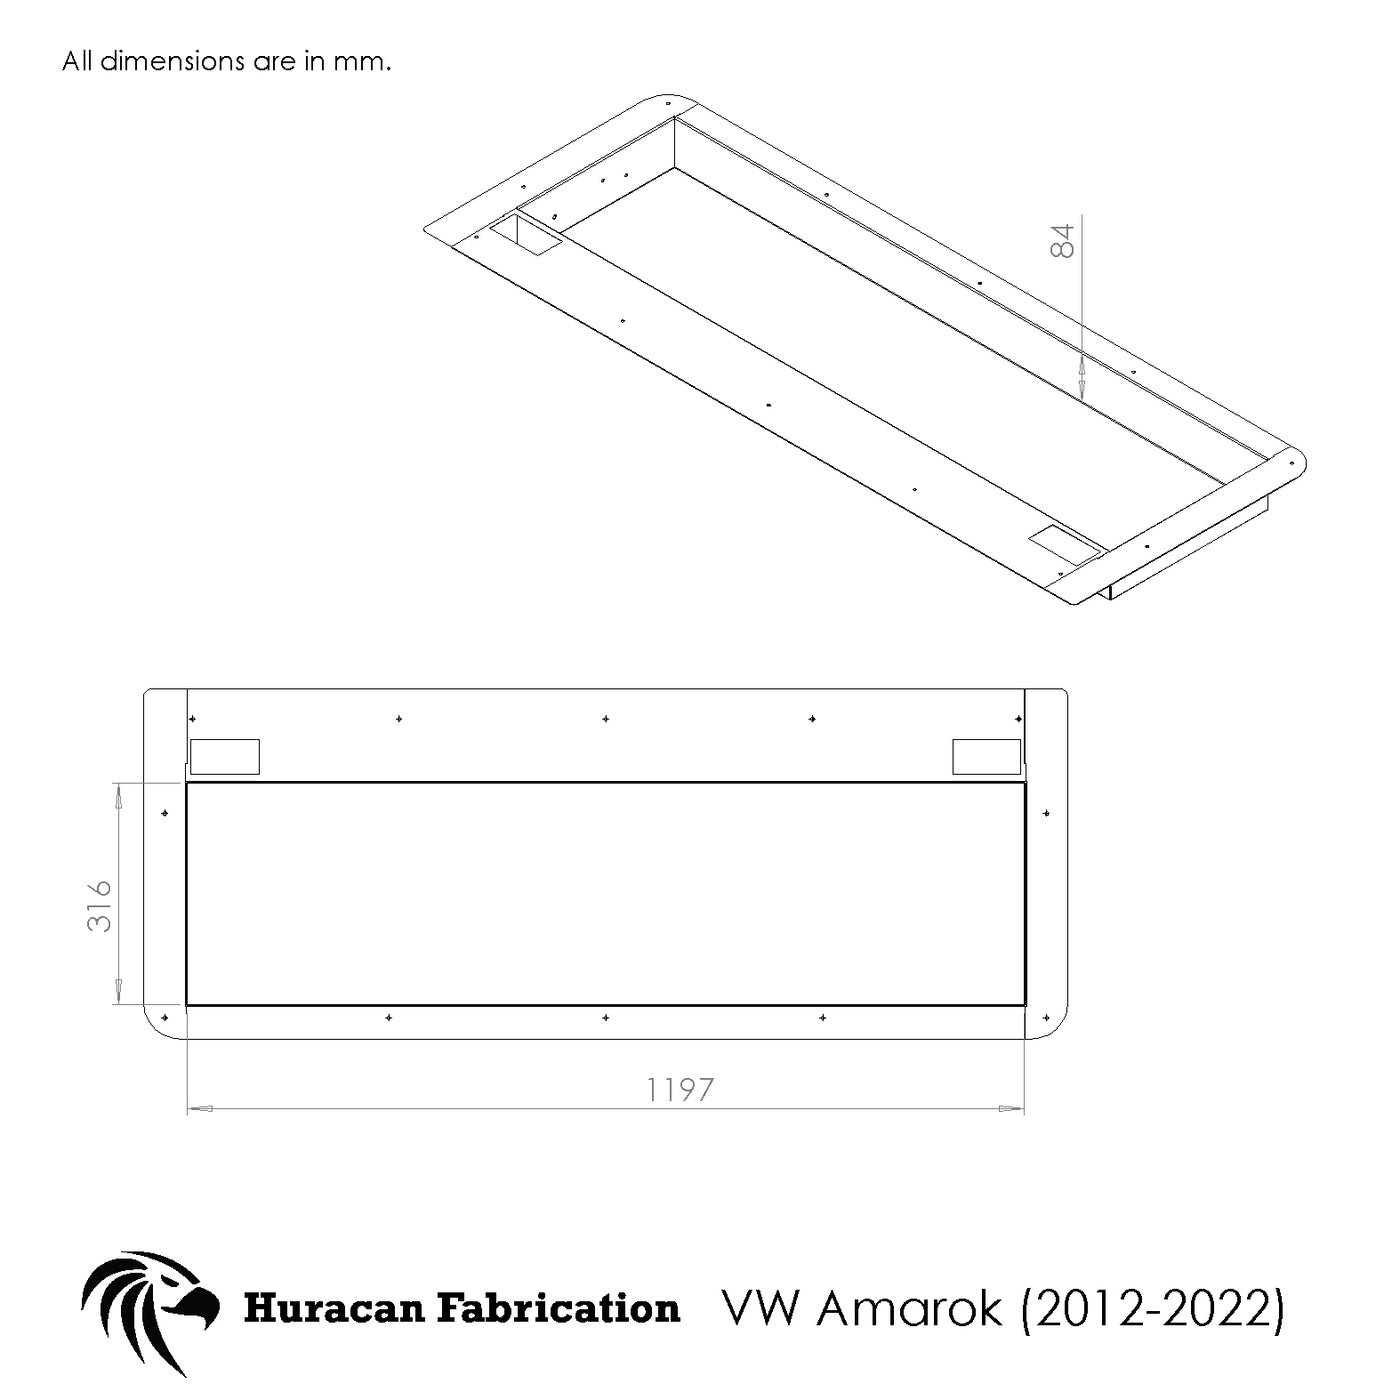 Amarok tailgate storage 2012 - 2022 model